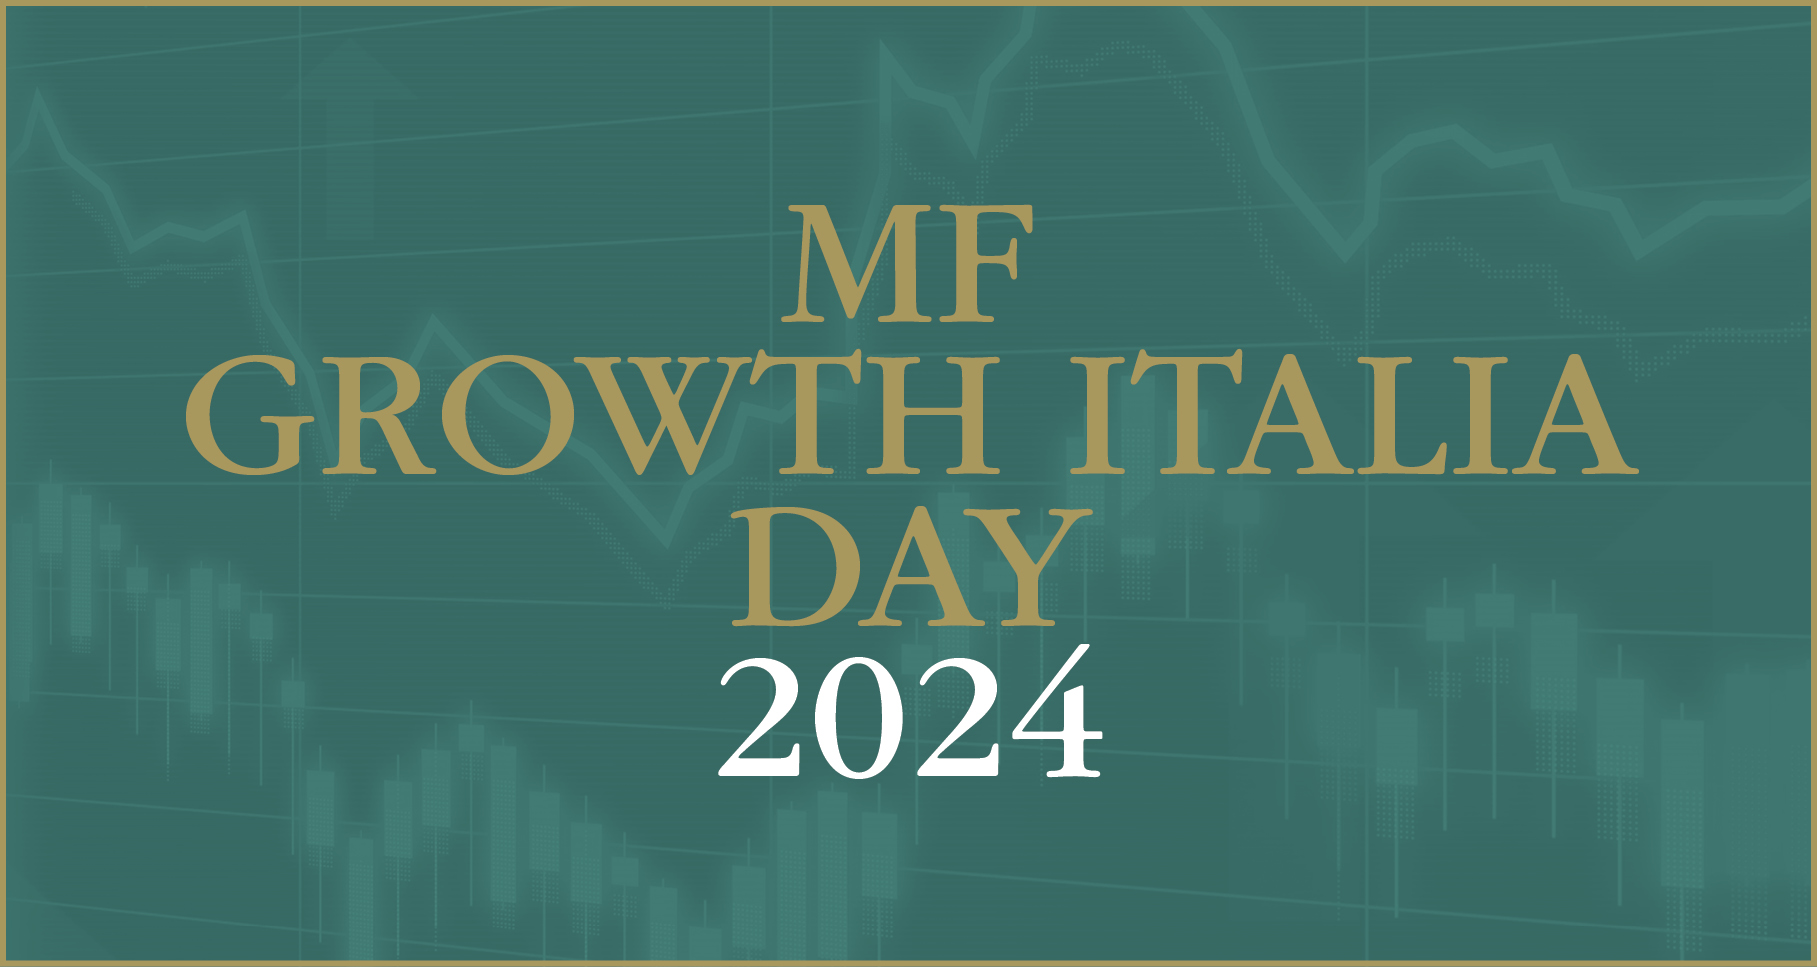 MF Growth Italia Day